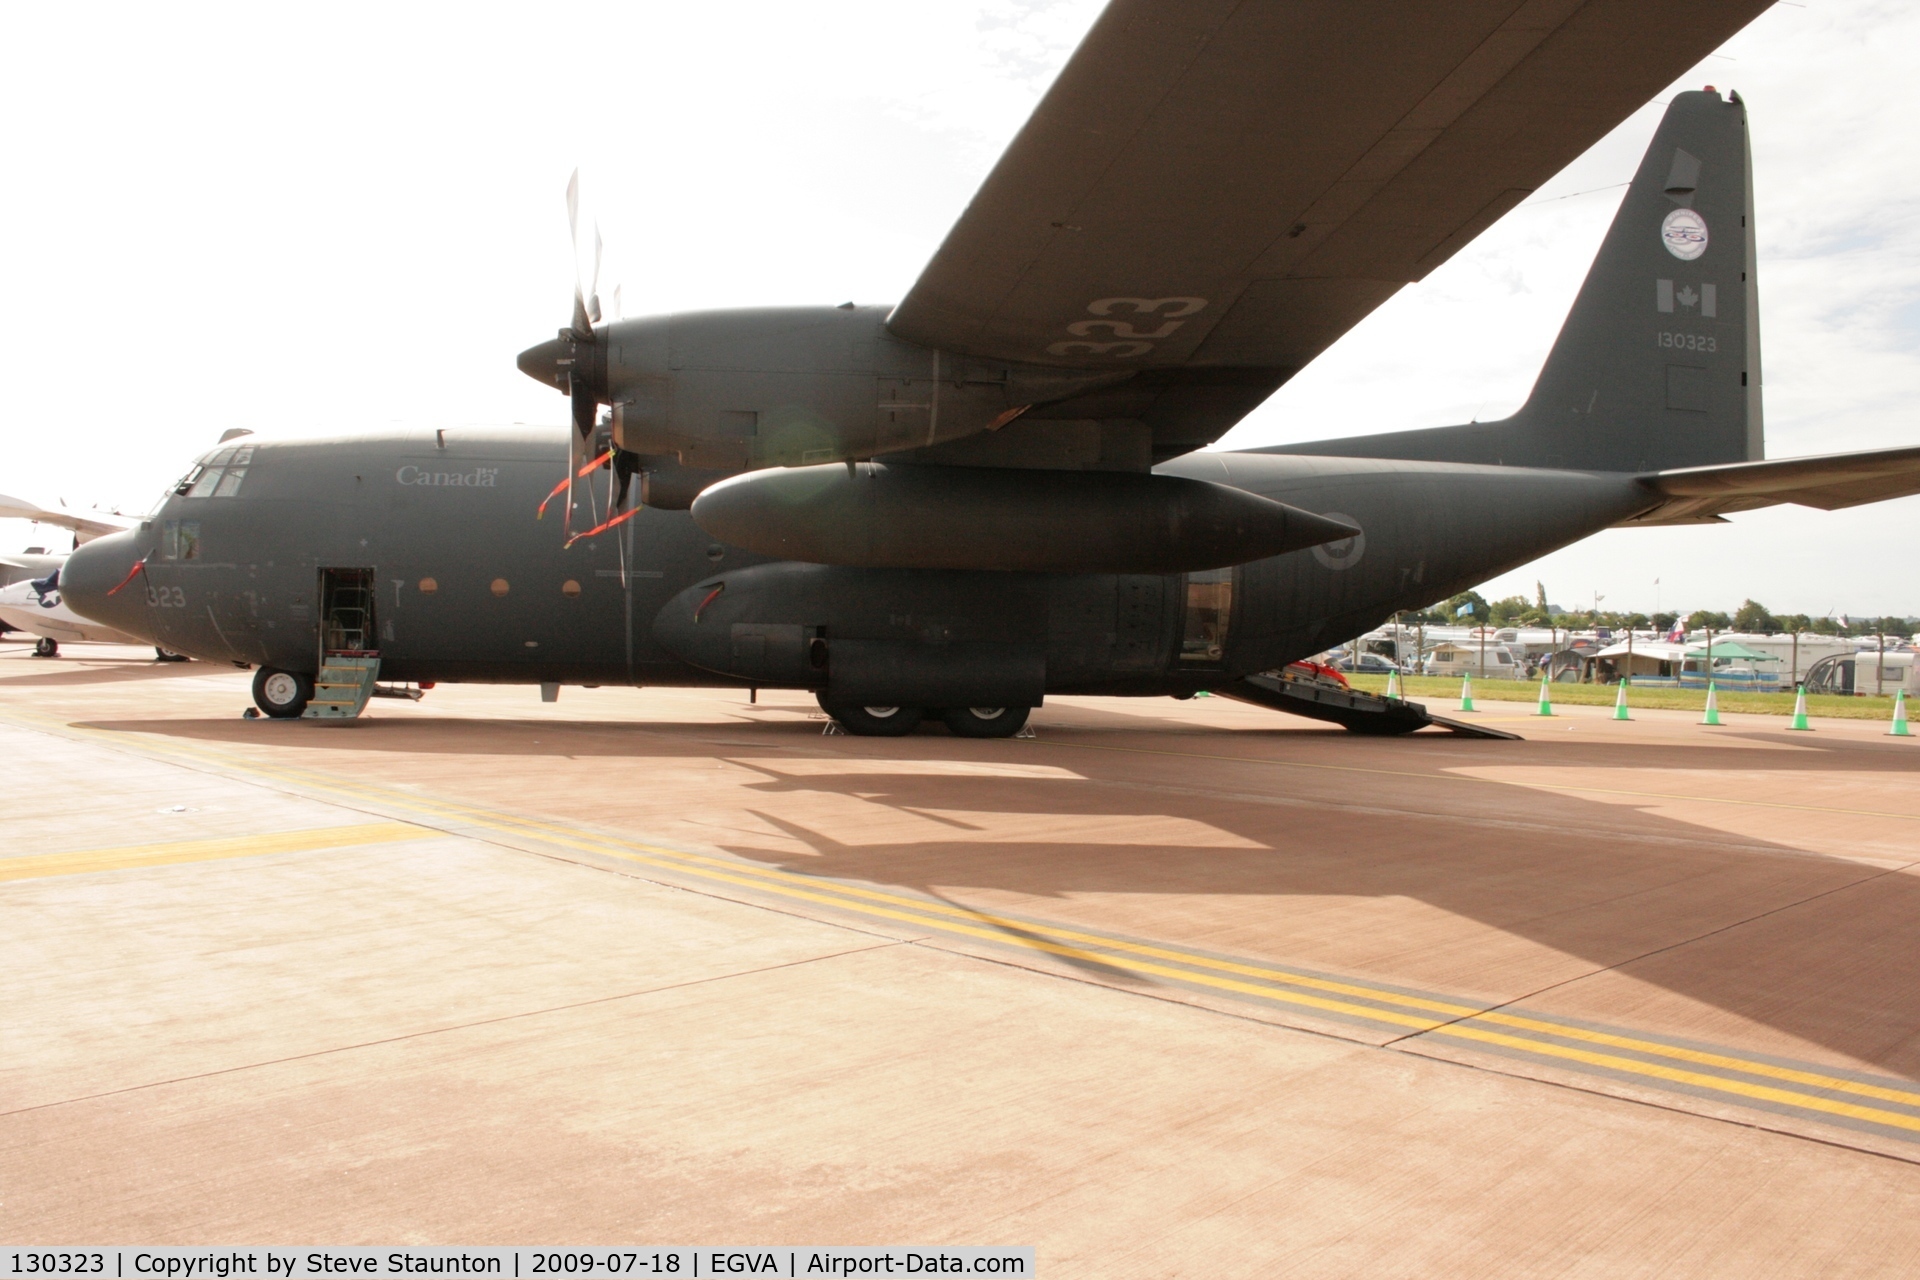 130323, 1966 Lockheed CC-130E Hercules C/N 382-4193, Taken at the Royal International Air Tattoo 2009